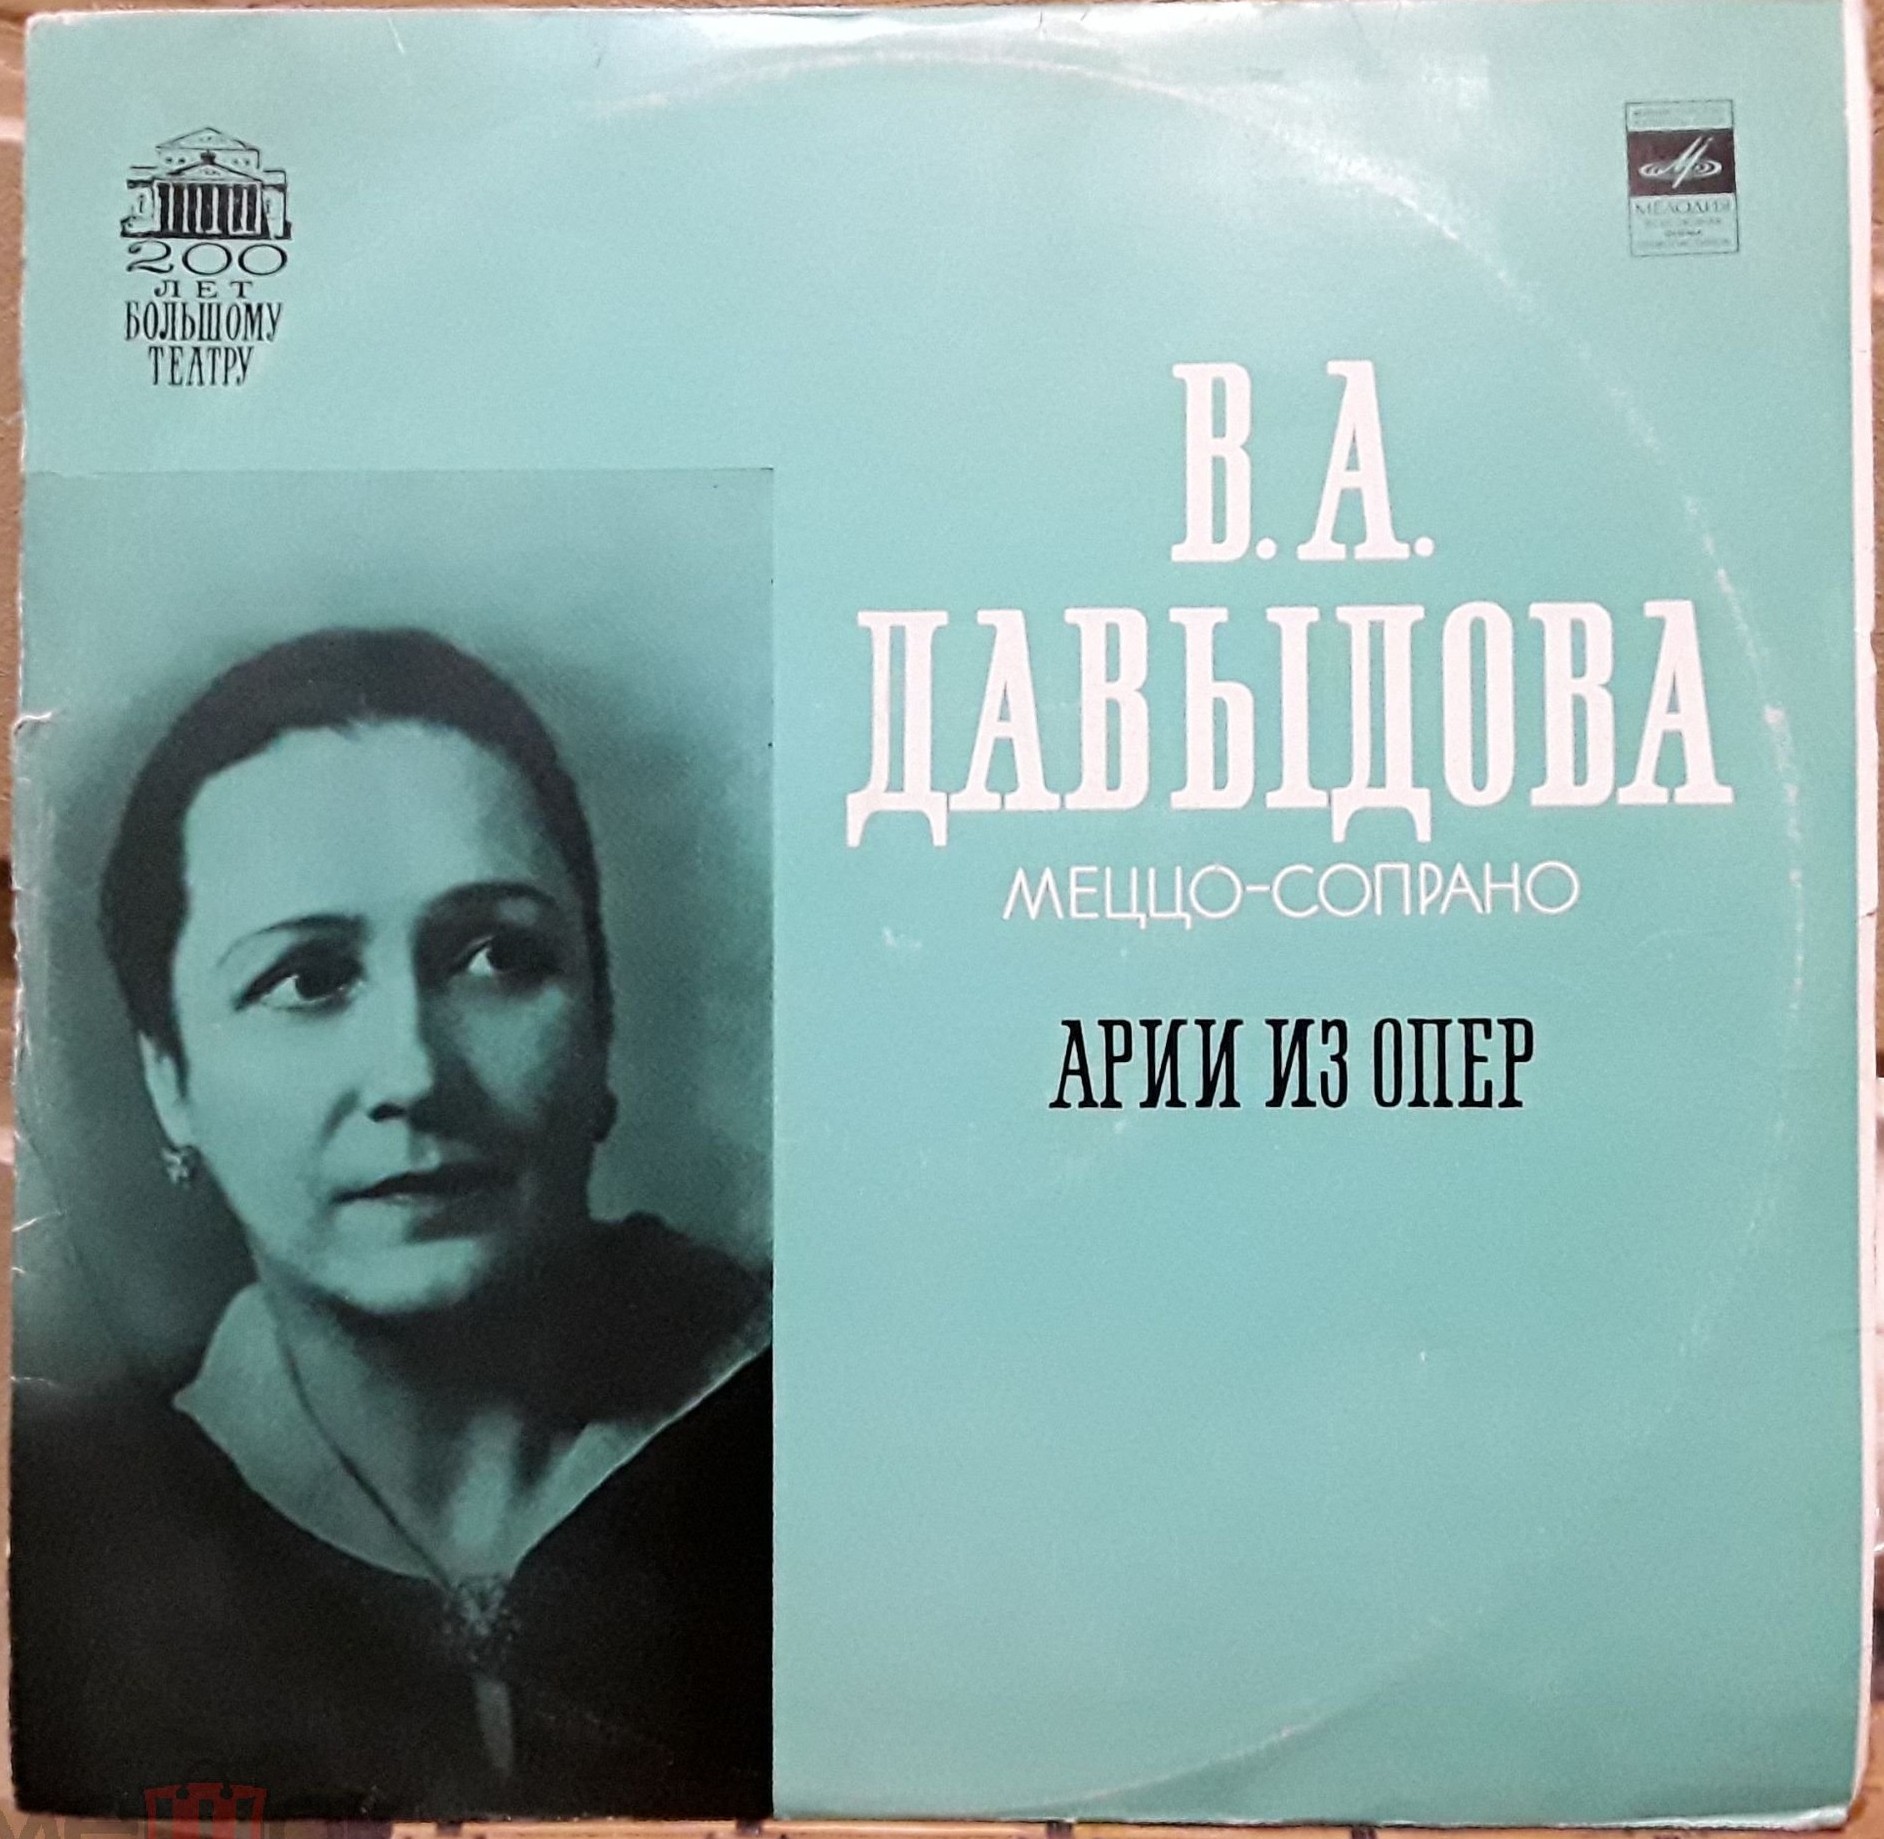 В. А. Давыдова (меццо-сопрано) - Арии из опер